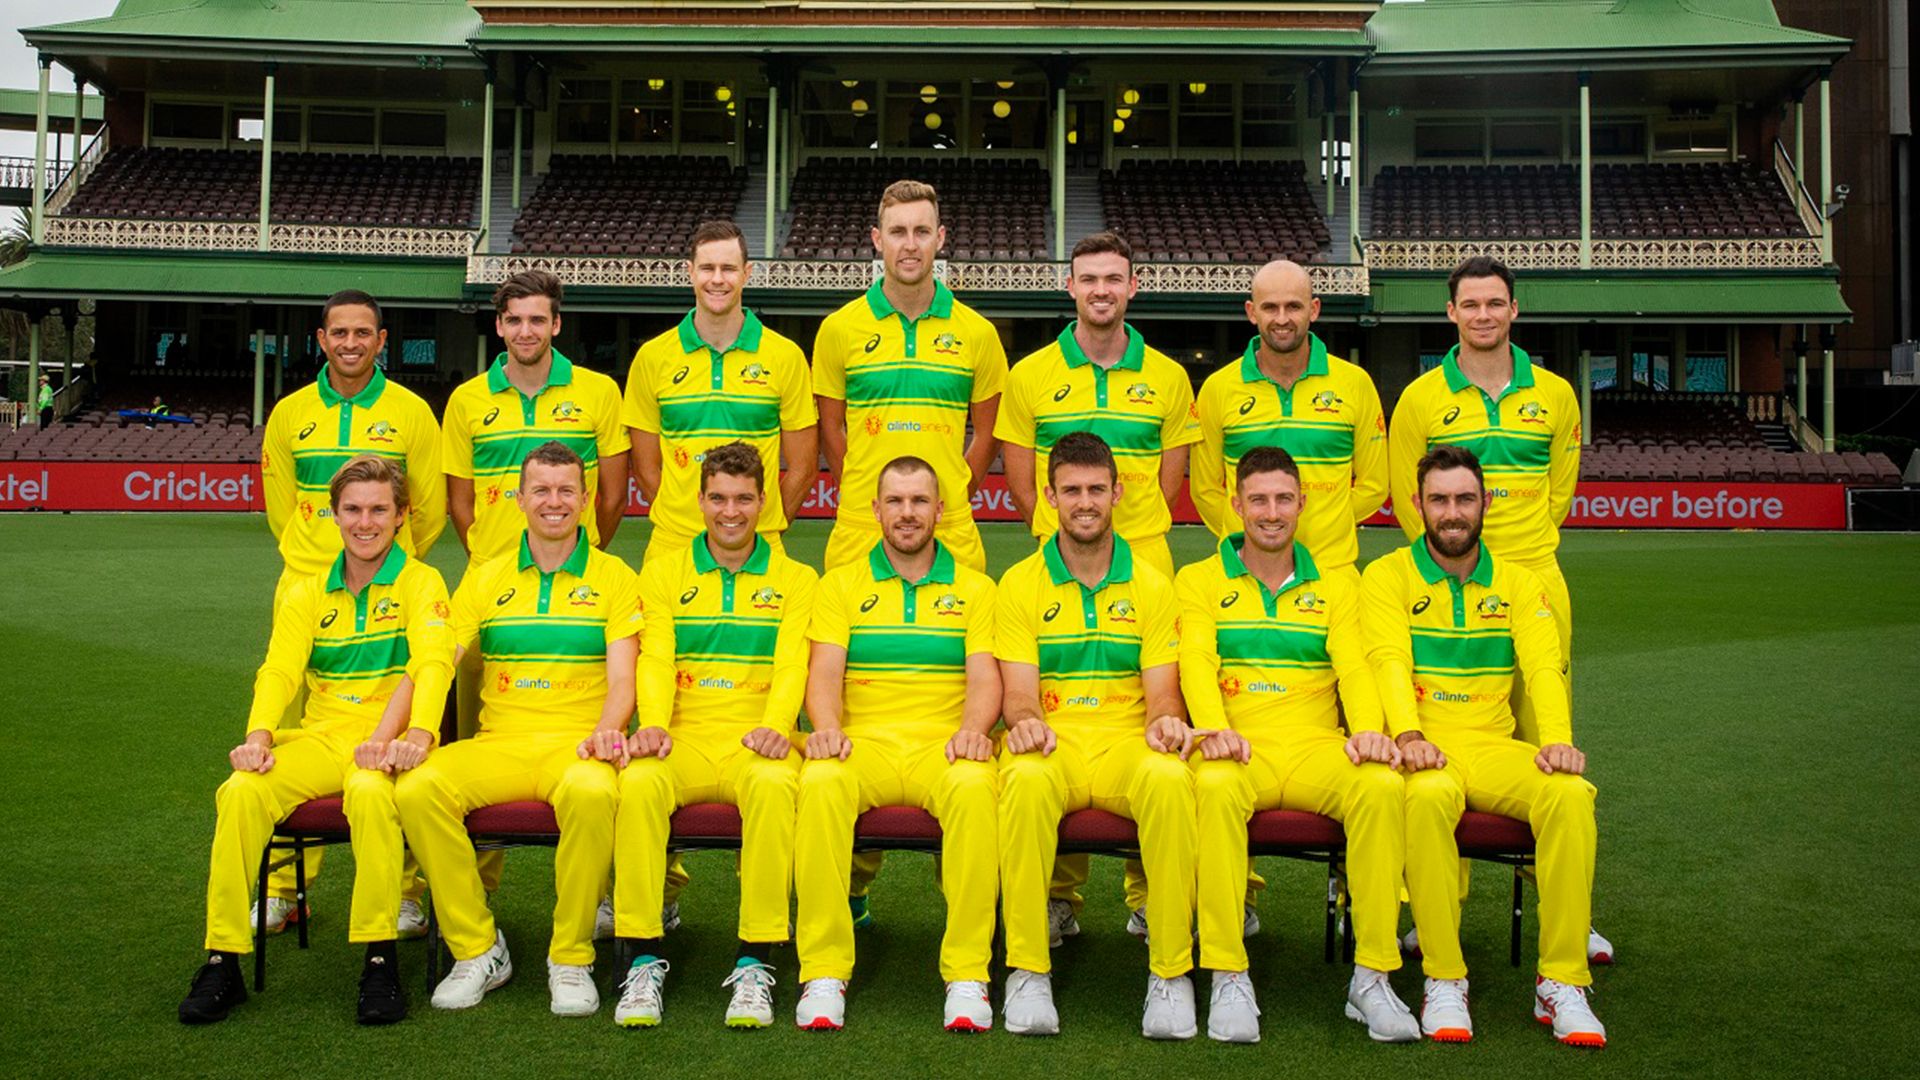 Australia Cricket Team For World Cup .teahub.io